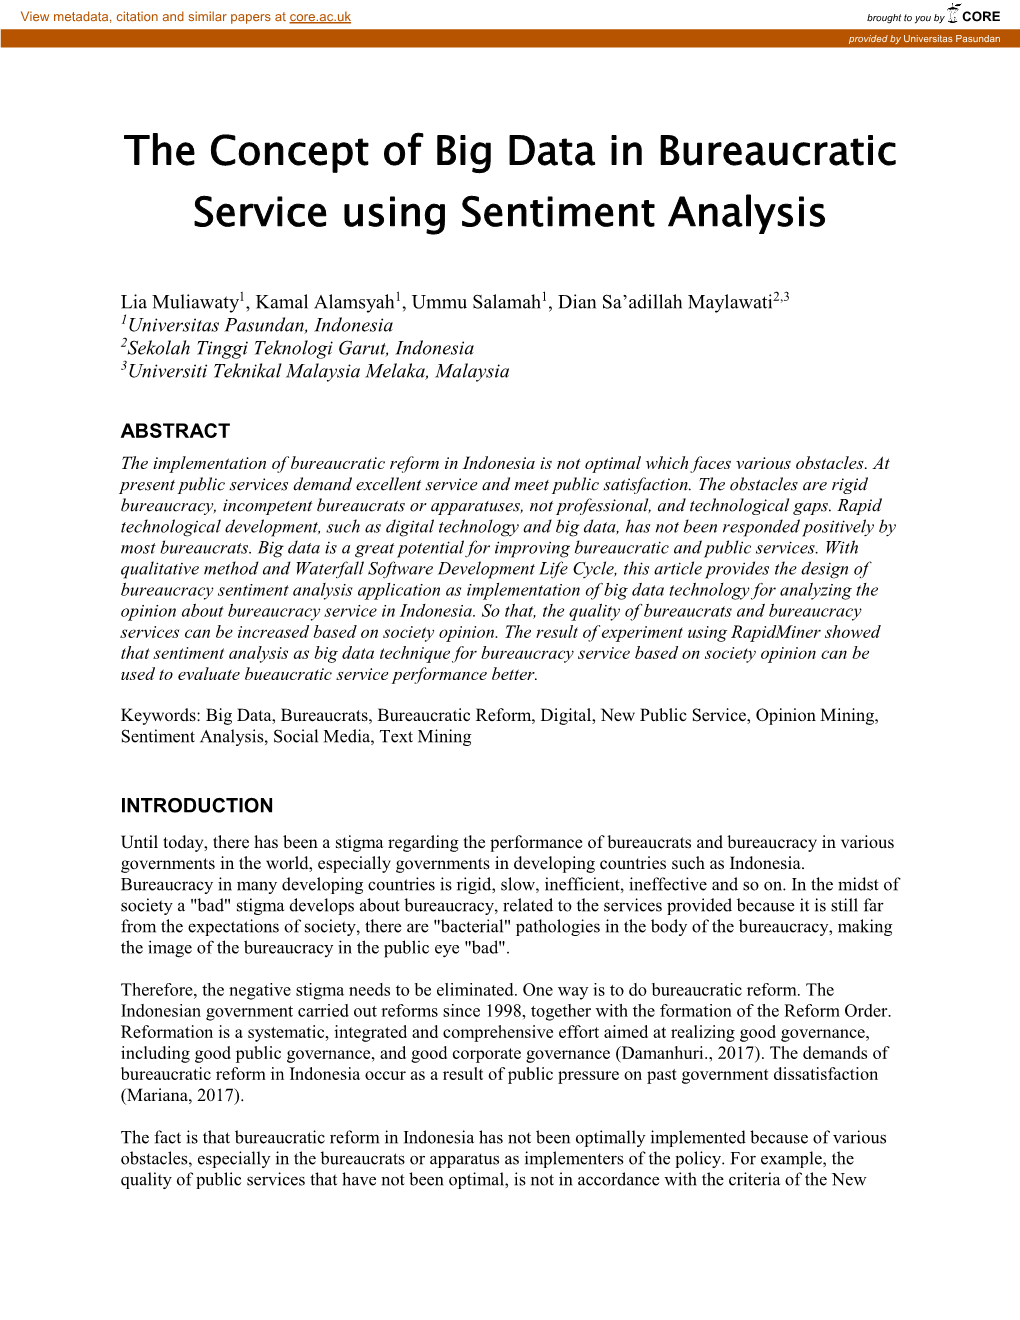 The Concept of Big Data in Bureaucratic Service Using Sentiment Analysis